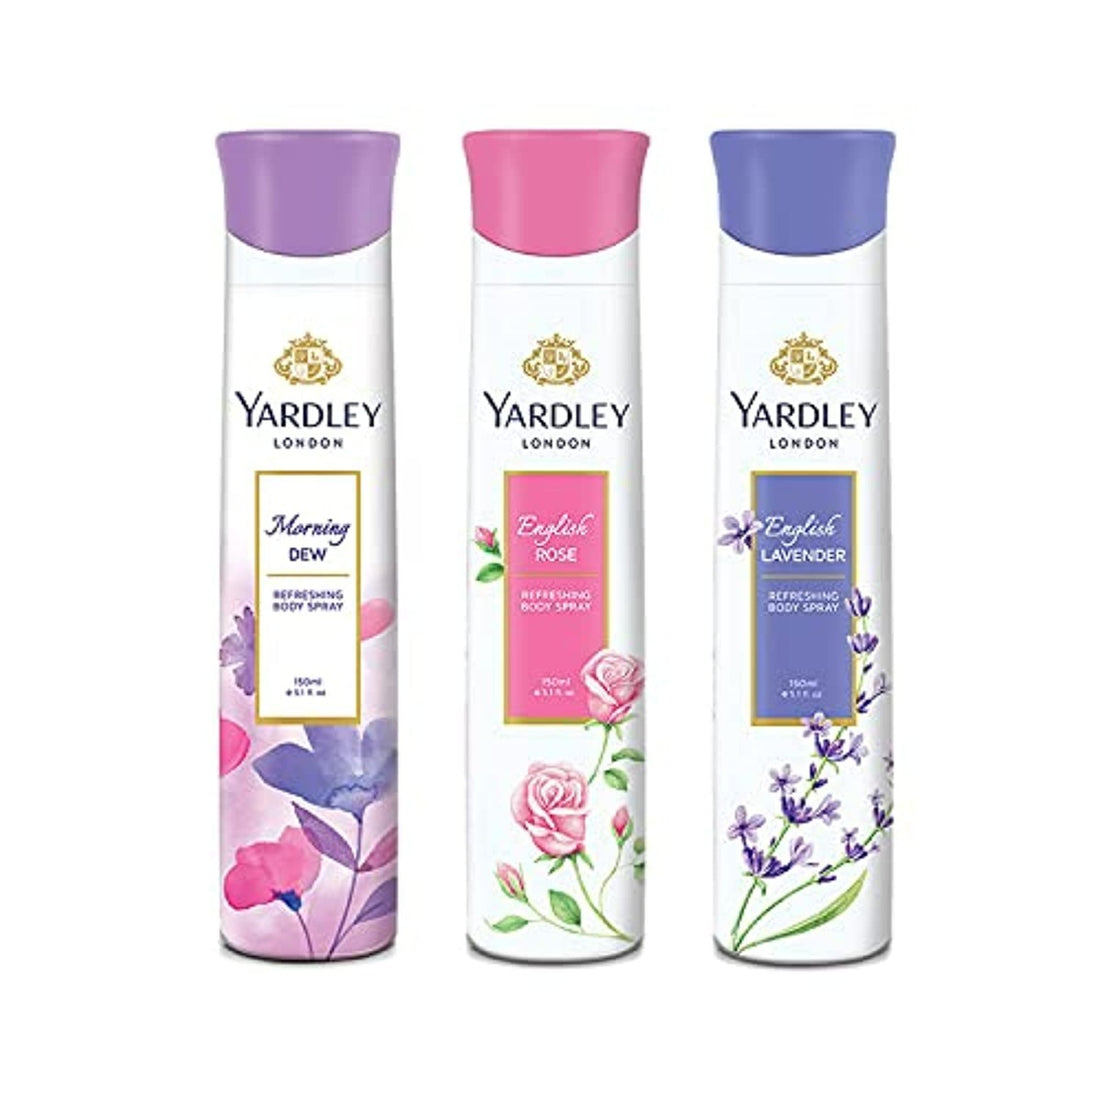 Yardley London Refreshing Body Spray (150ml)